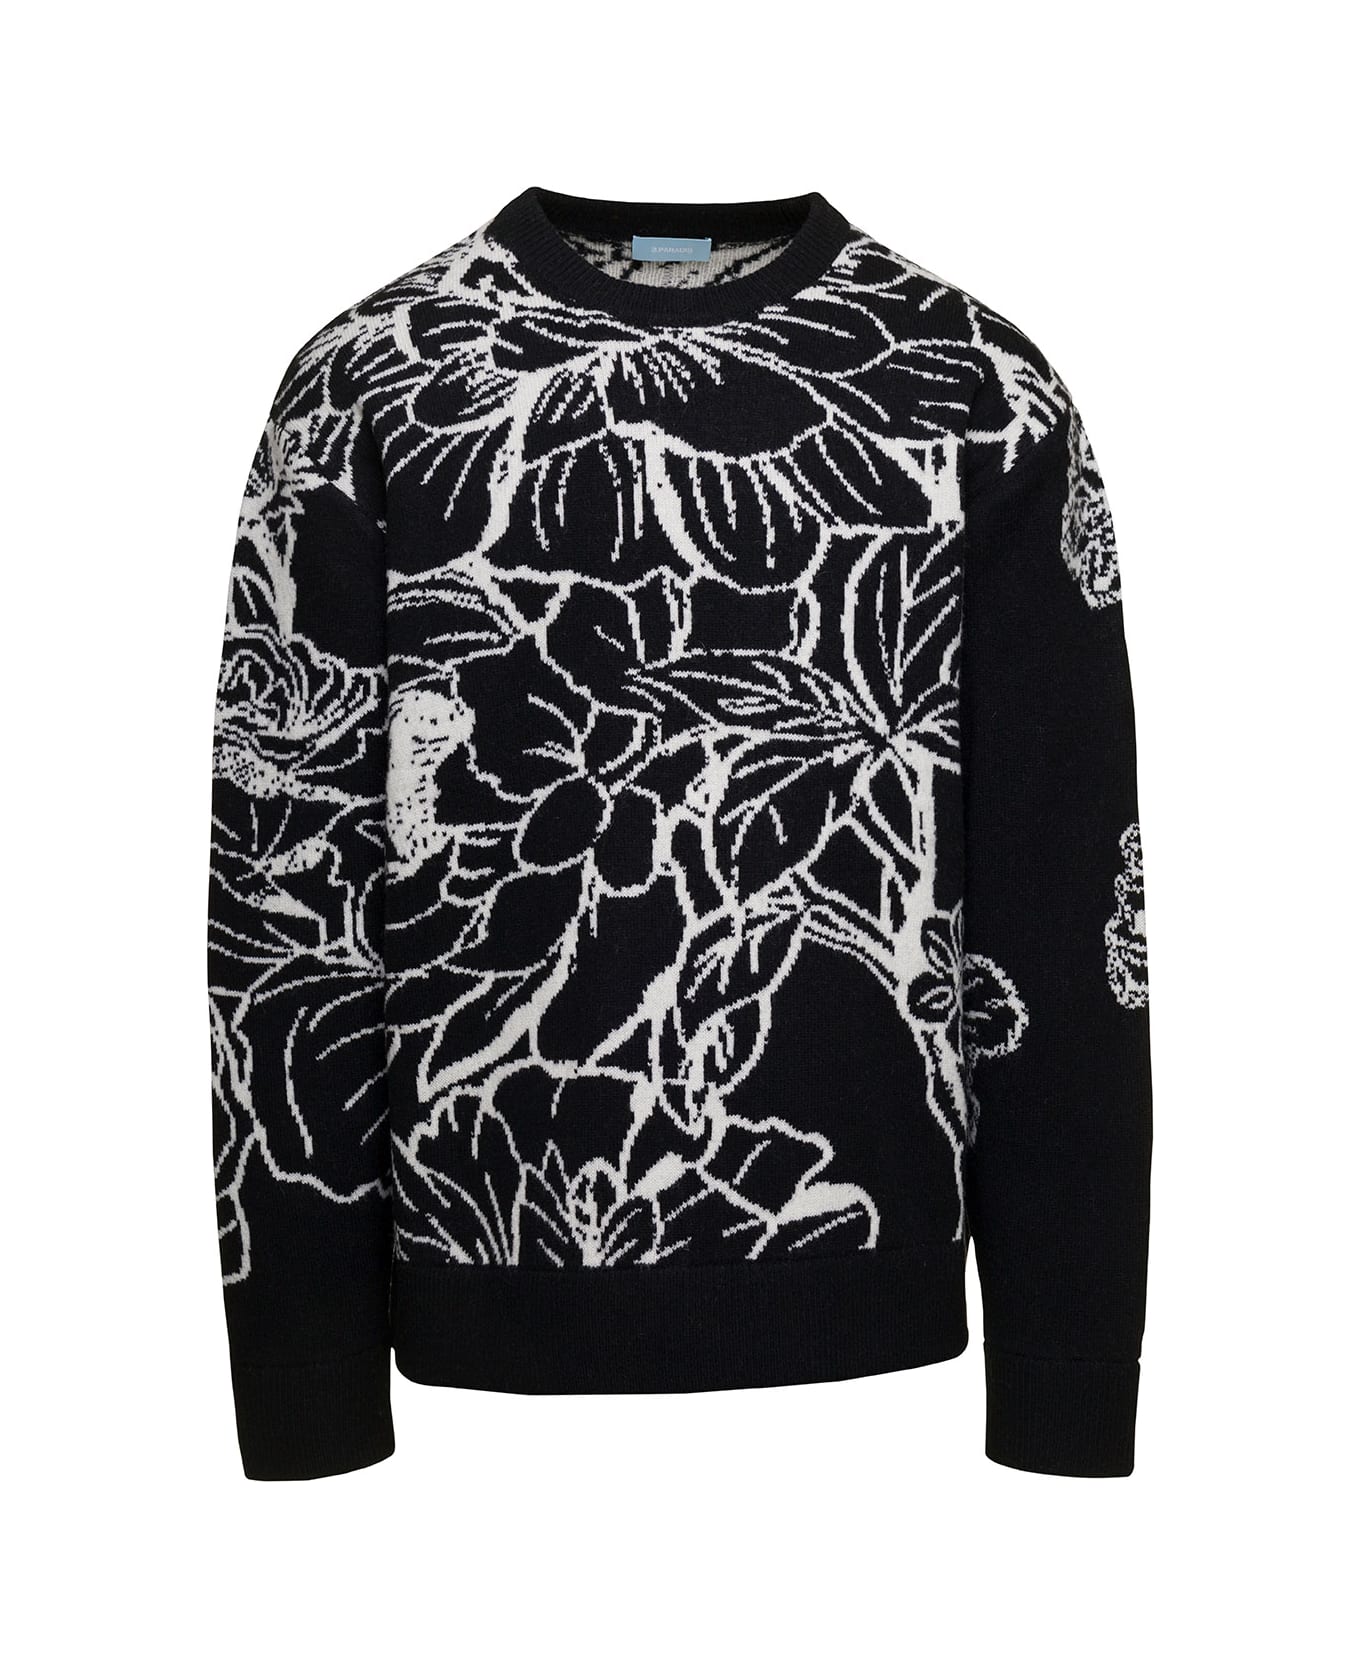 3.Paradis Knit Crewneck Sweater Flowers - Black ニットウェア